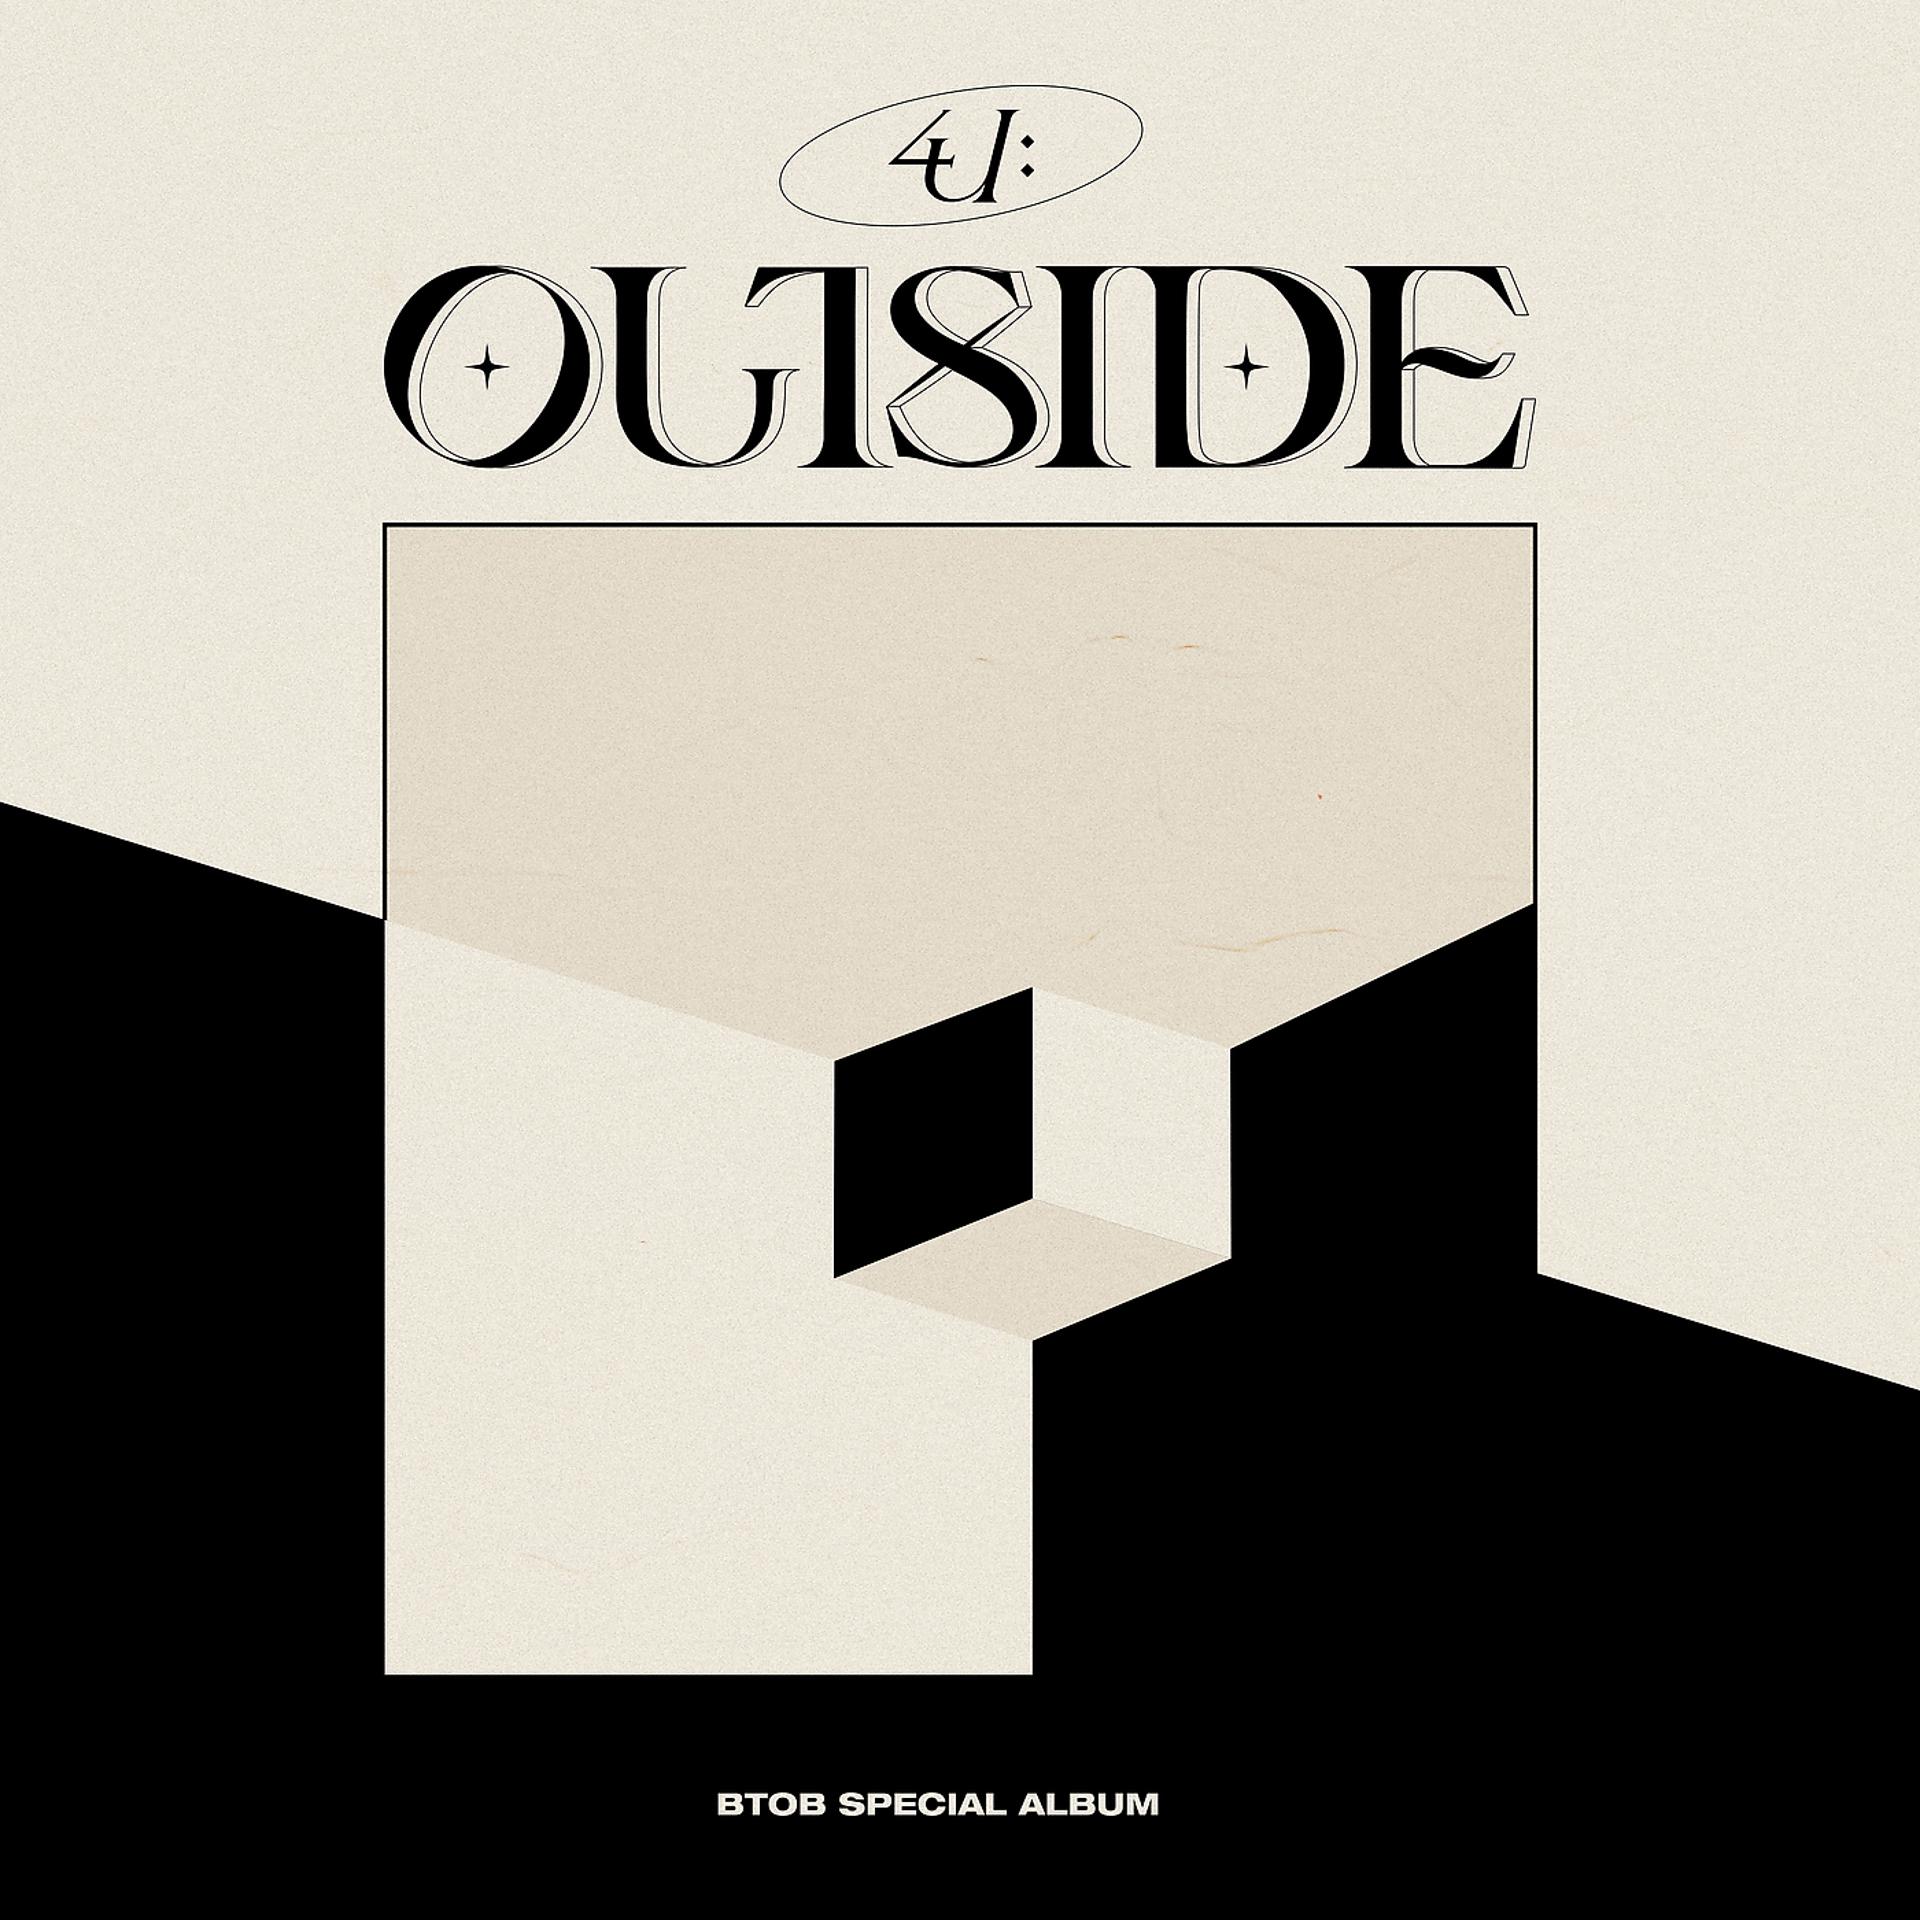 Постер к треку BTOB - Outsider